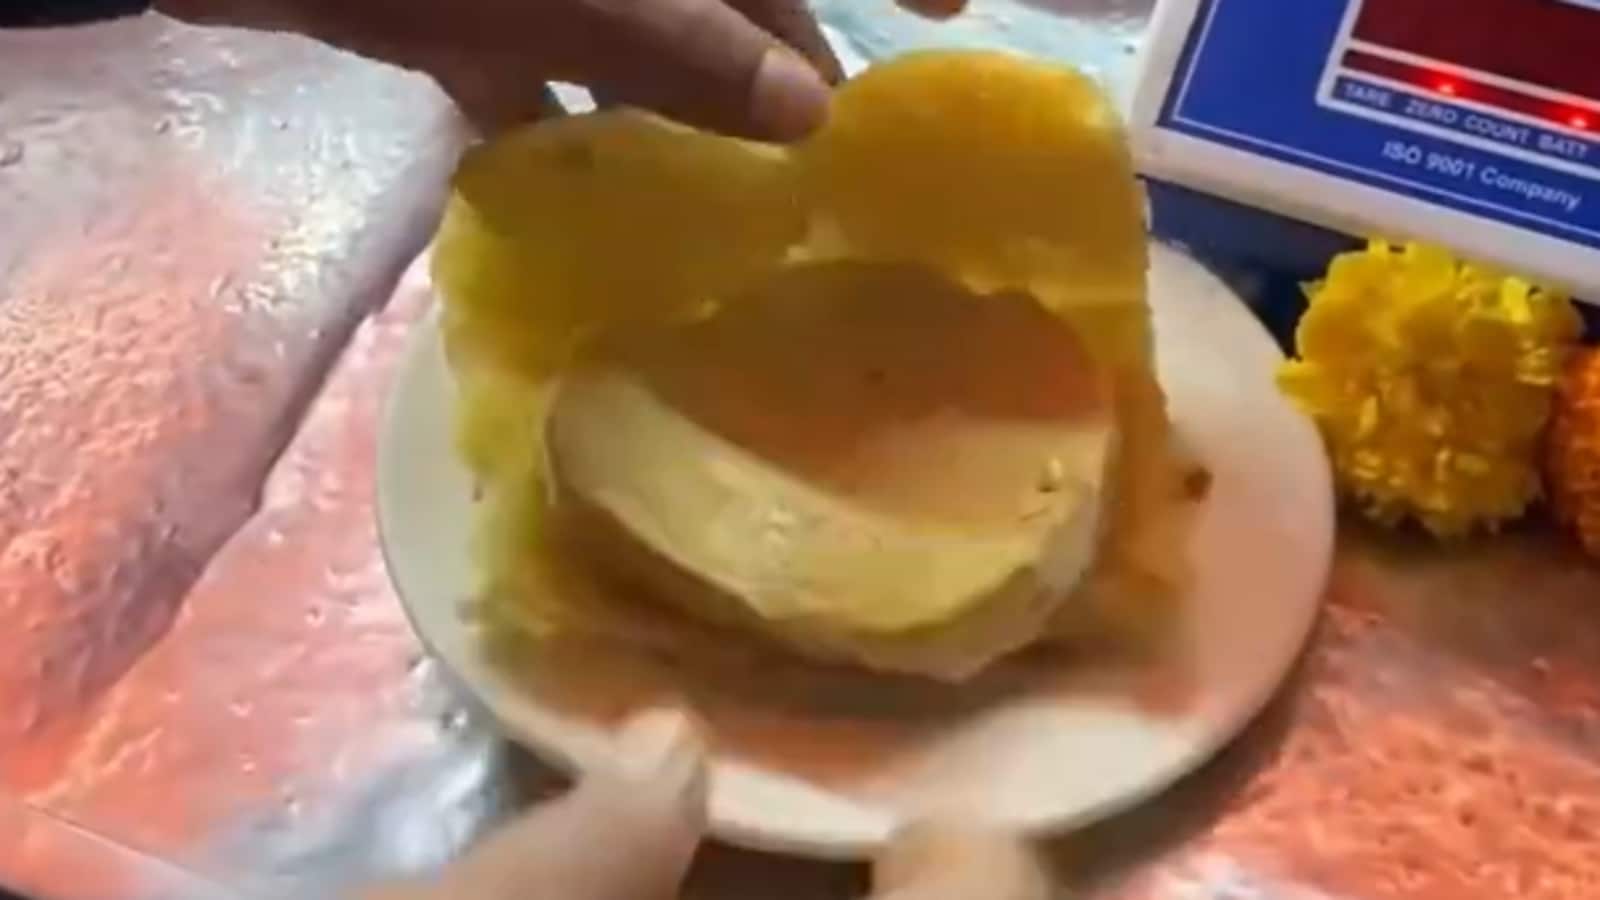 Buttery pav stuffed with kulfi? Bizarre food combination confuses people